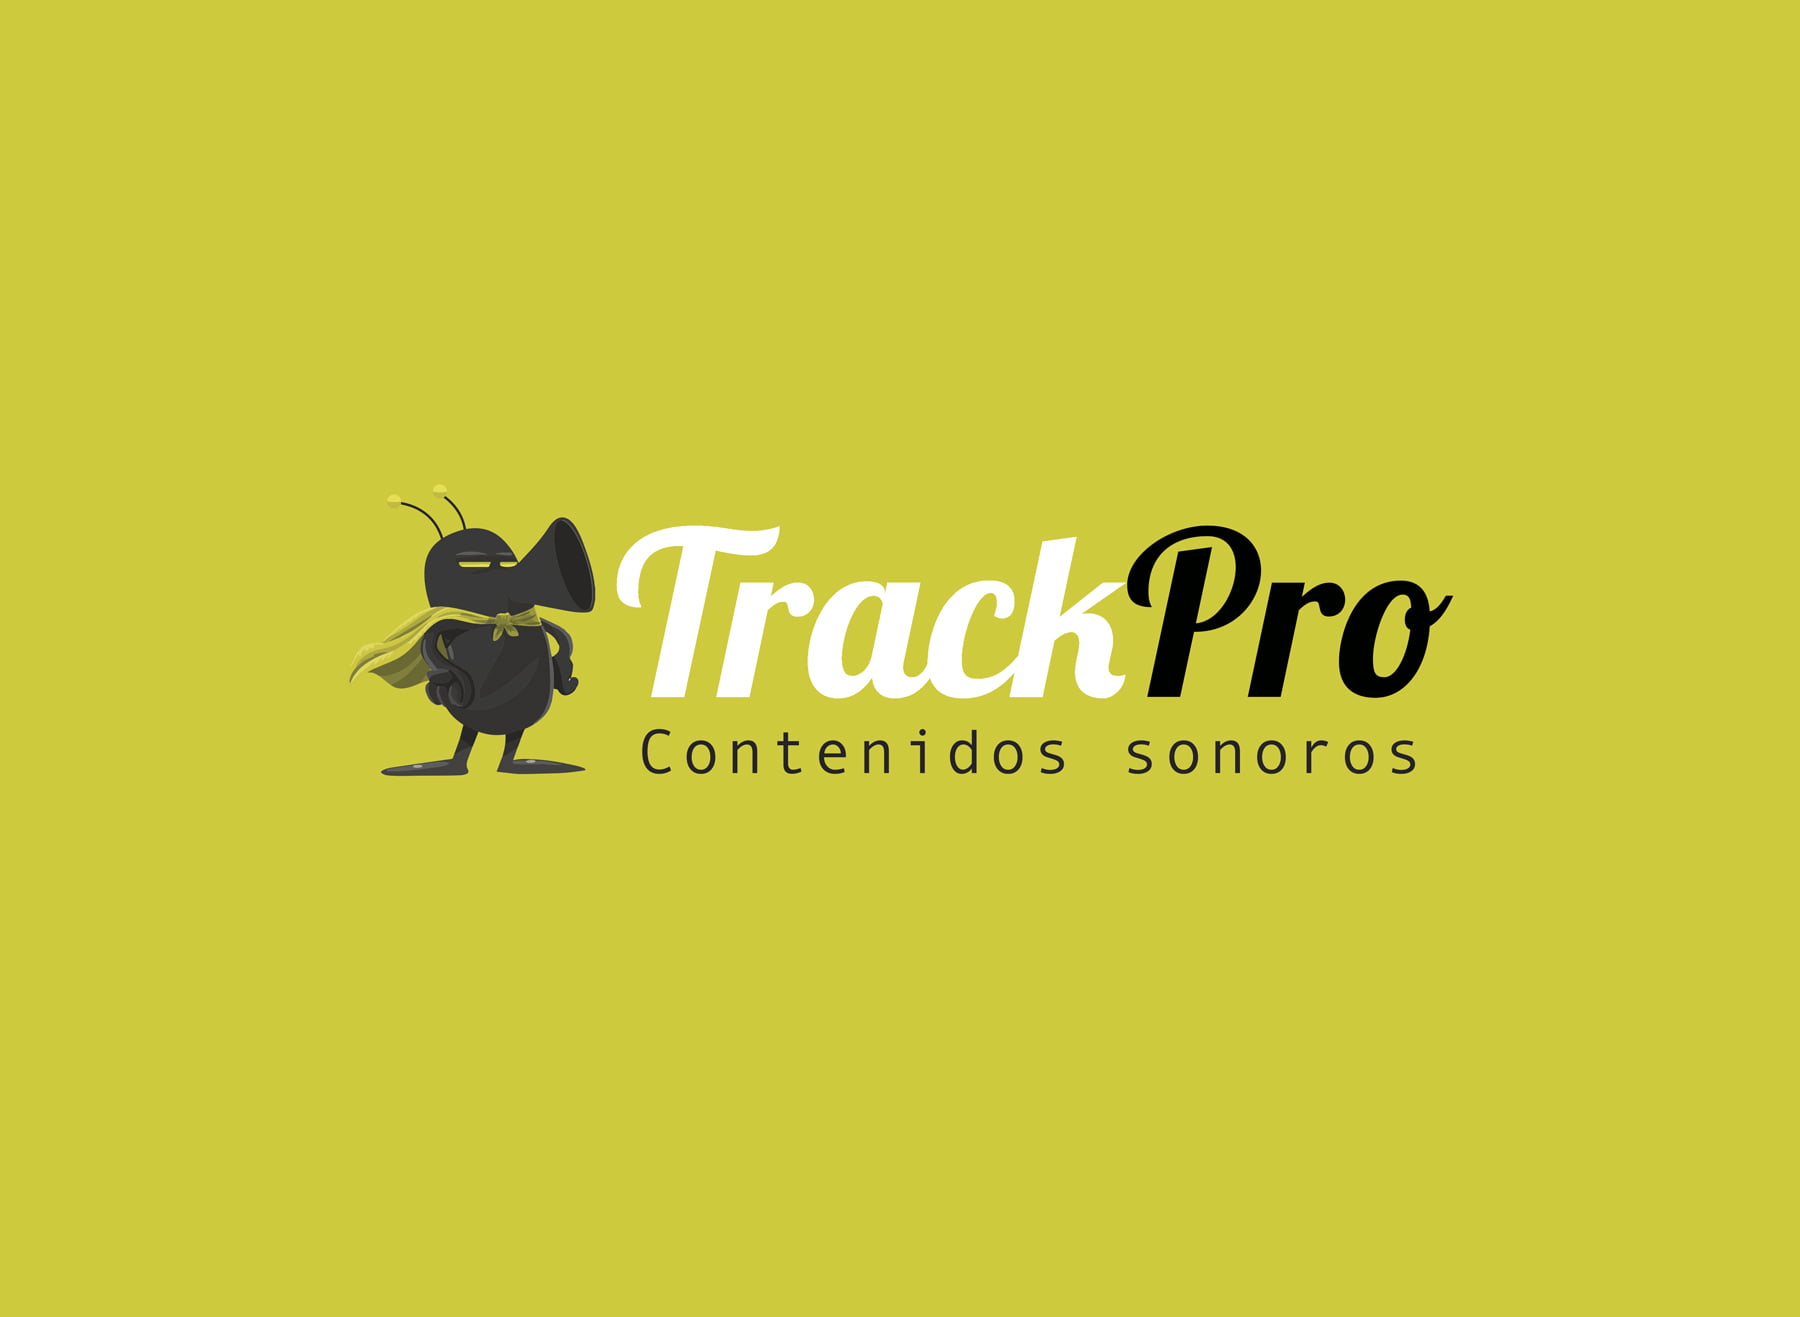 (c) Trackpro.es